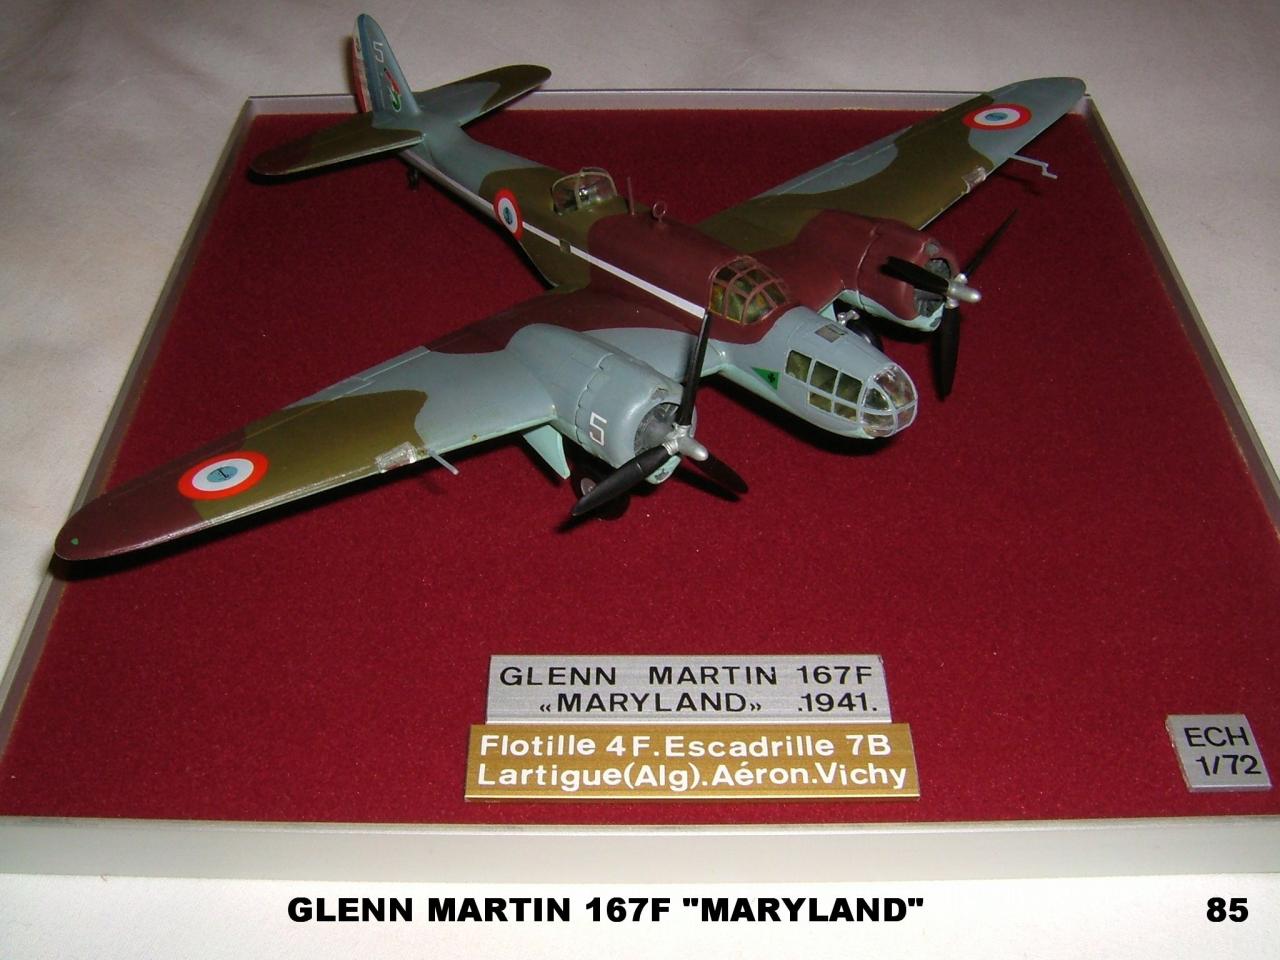 GLENN MARTIN 167F MARYLAND